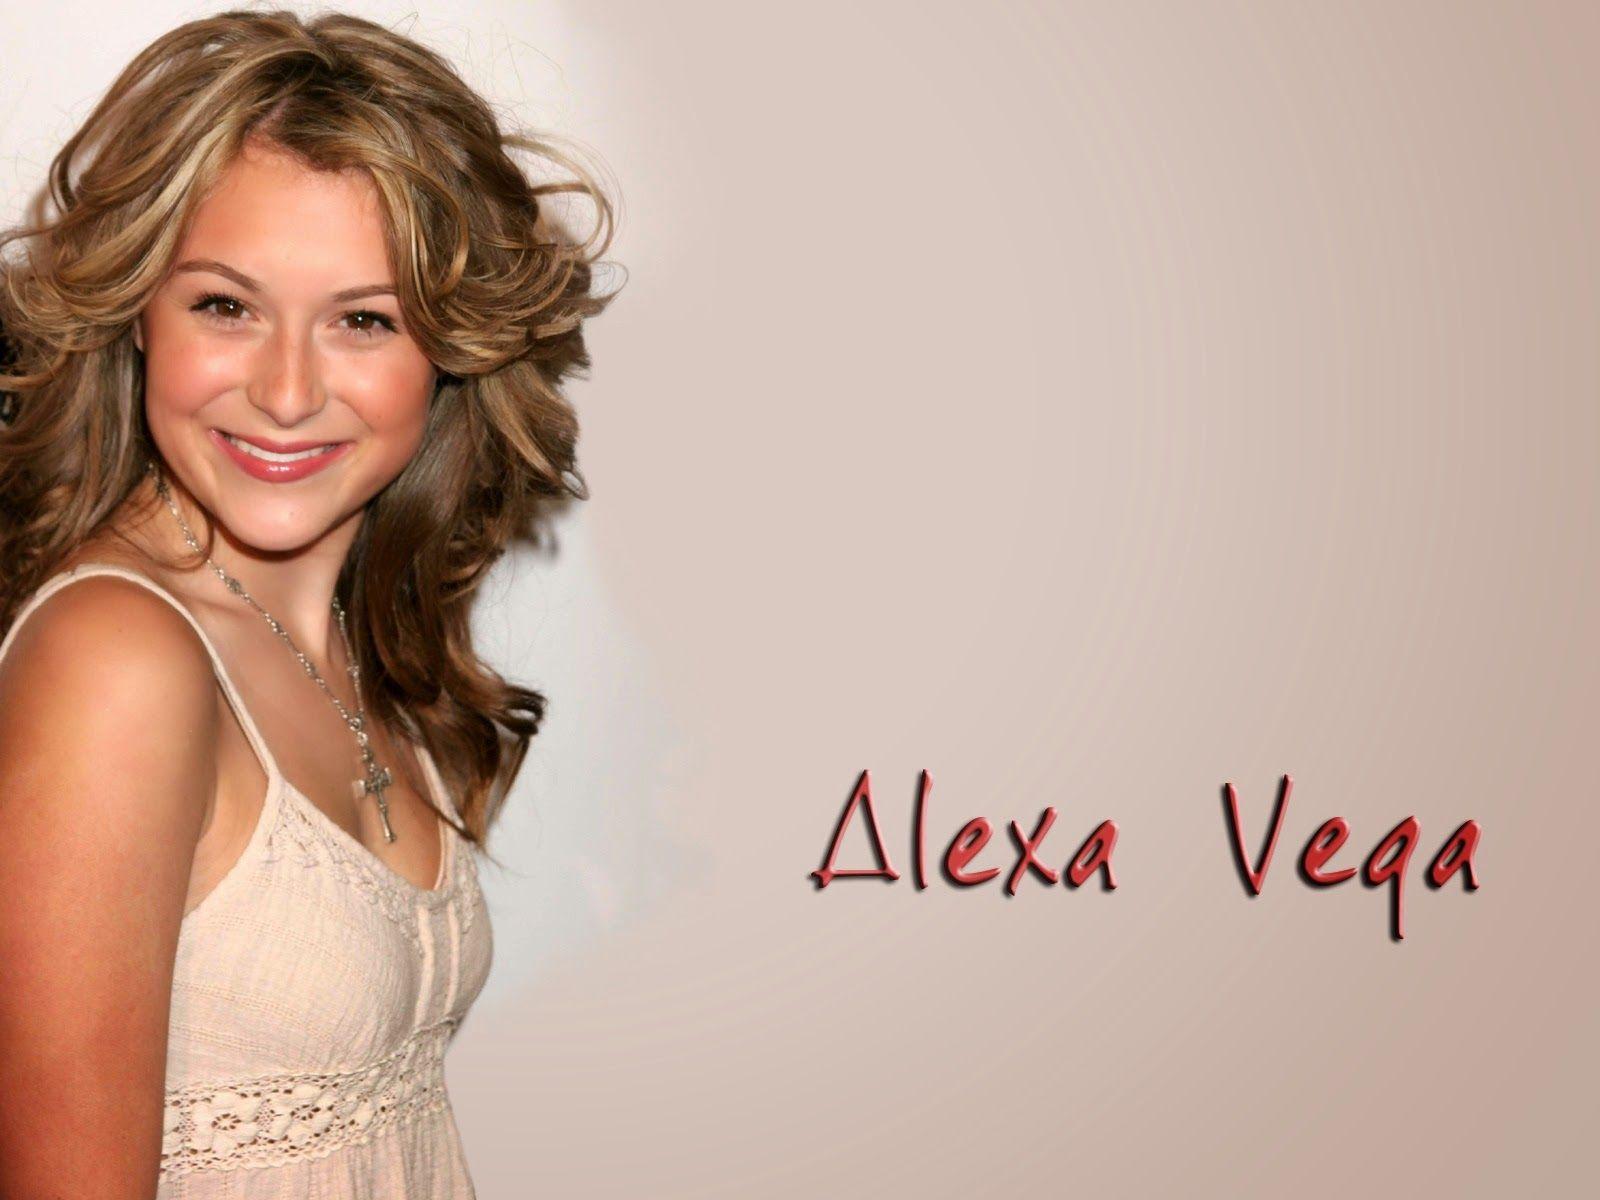 Alexa Vega HD Wallpaper Free Download